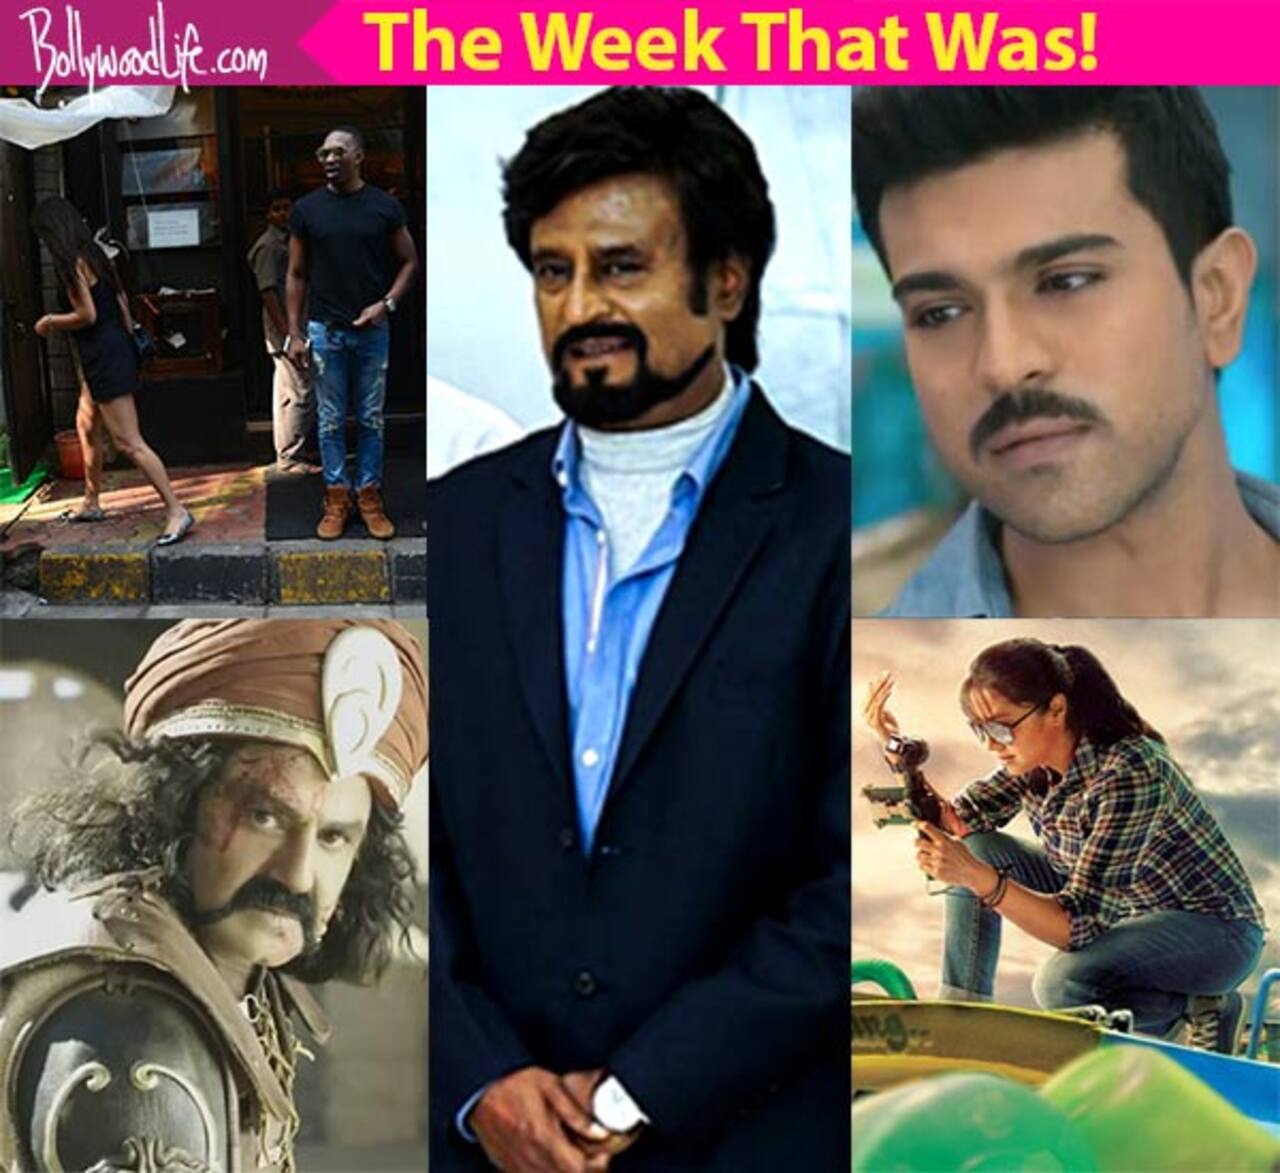 Rajinikanth's 2.0 first look teaser, Shriya Saran's secret date - meet the top 5 newsmakers of the week